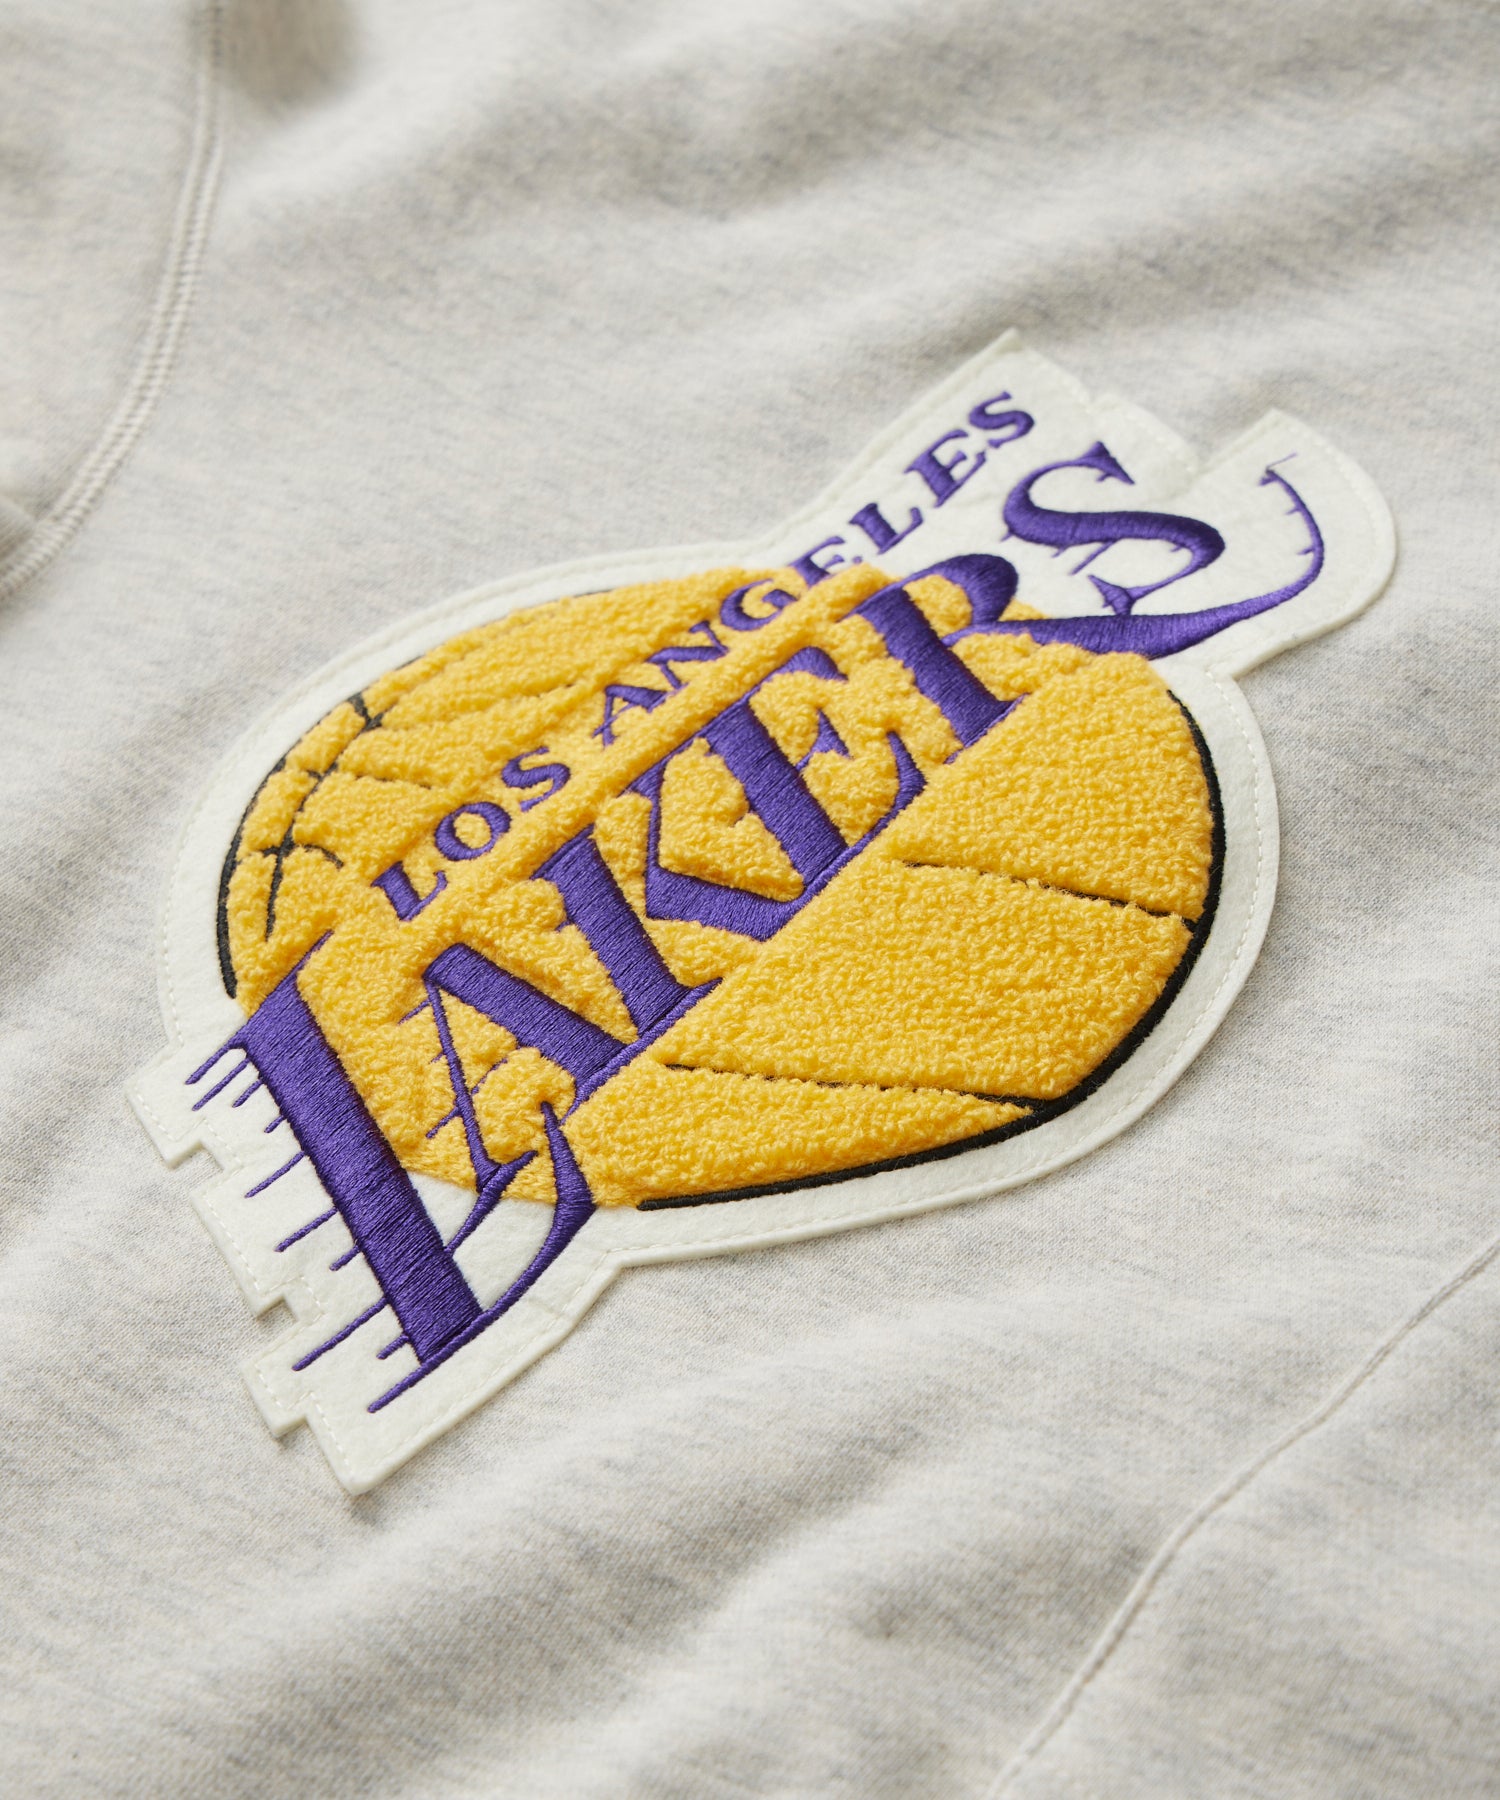 Best Selling Product] Los Angeles Lakers New Version Hoodie Dress